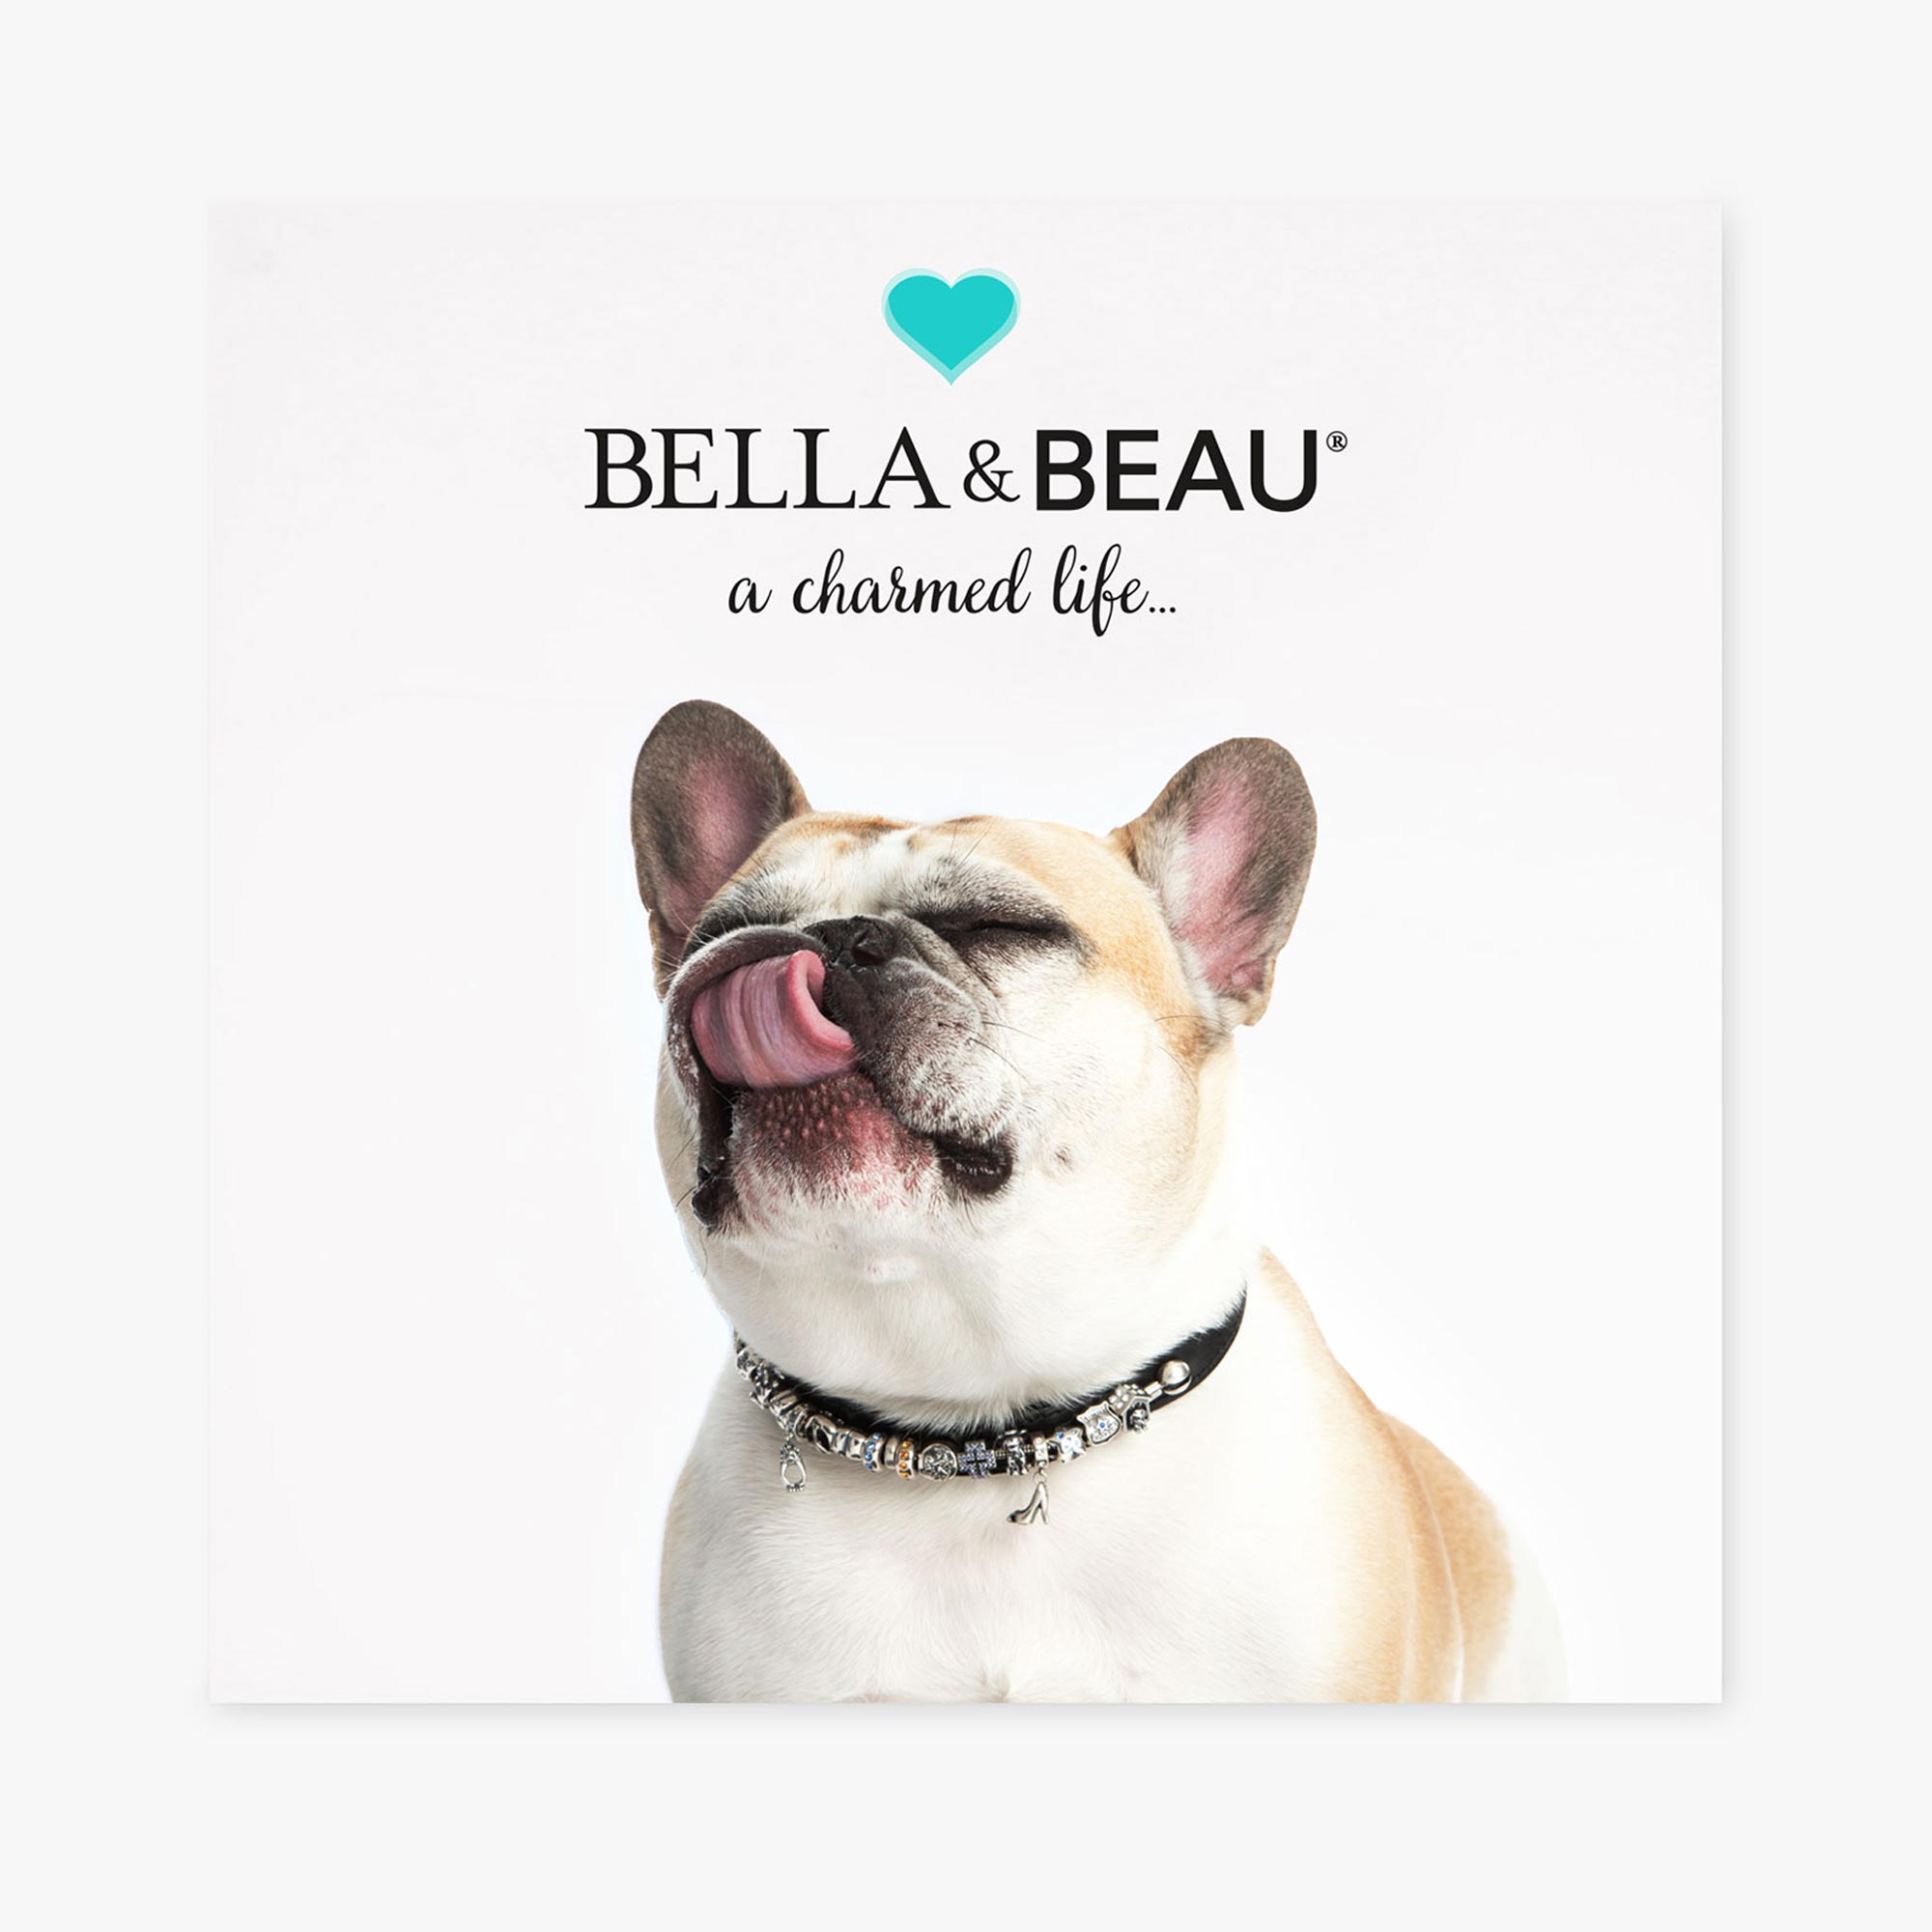 Bella & Beau Charmed Collars: How It Works